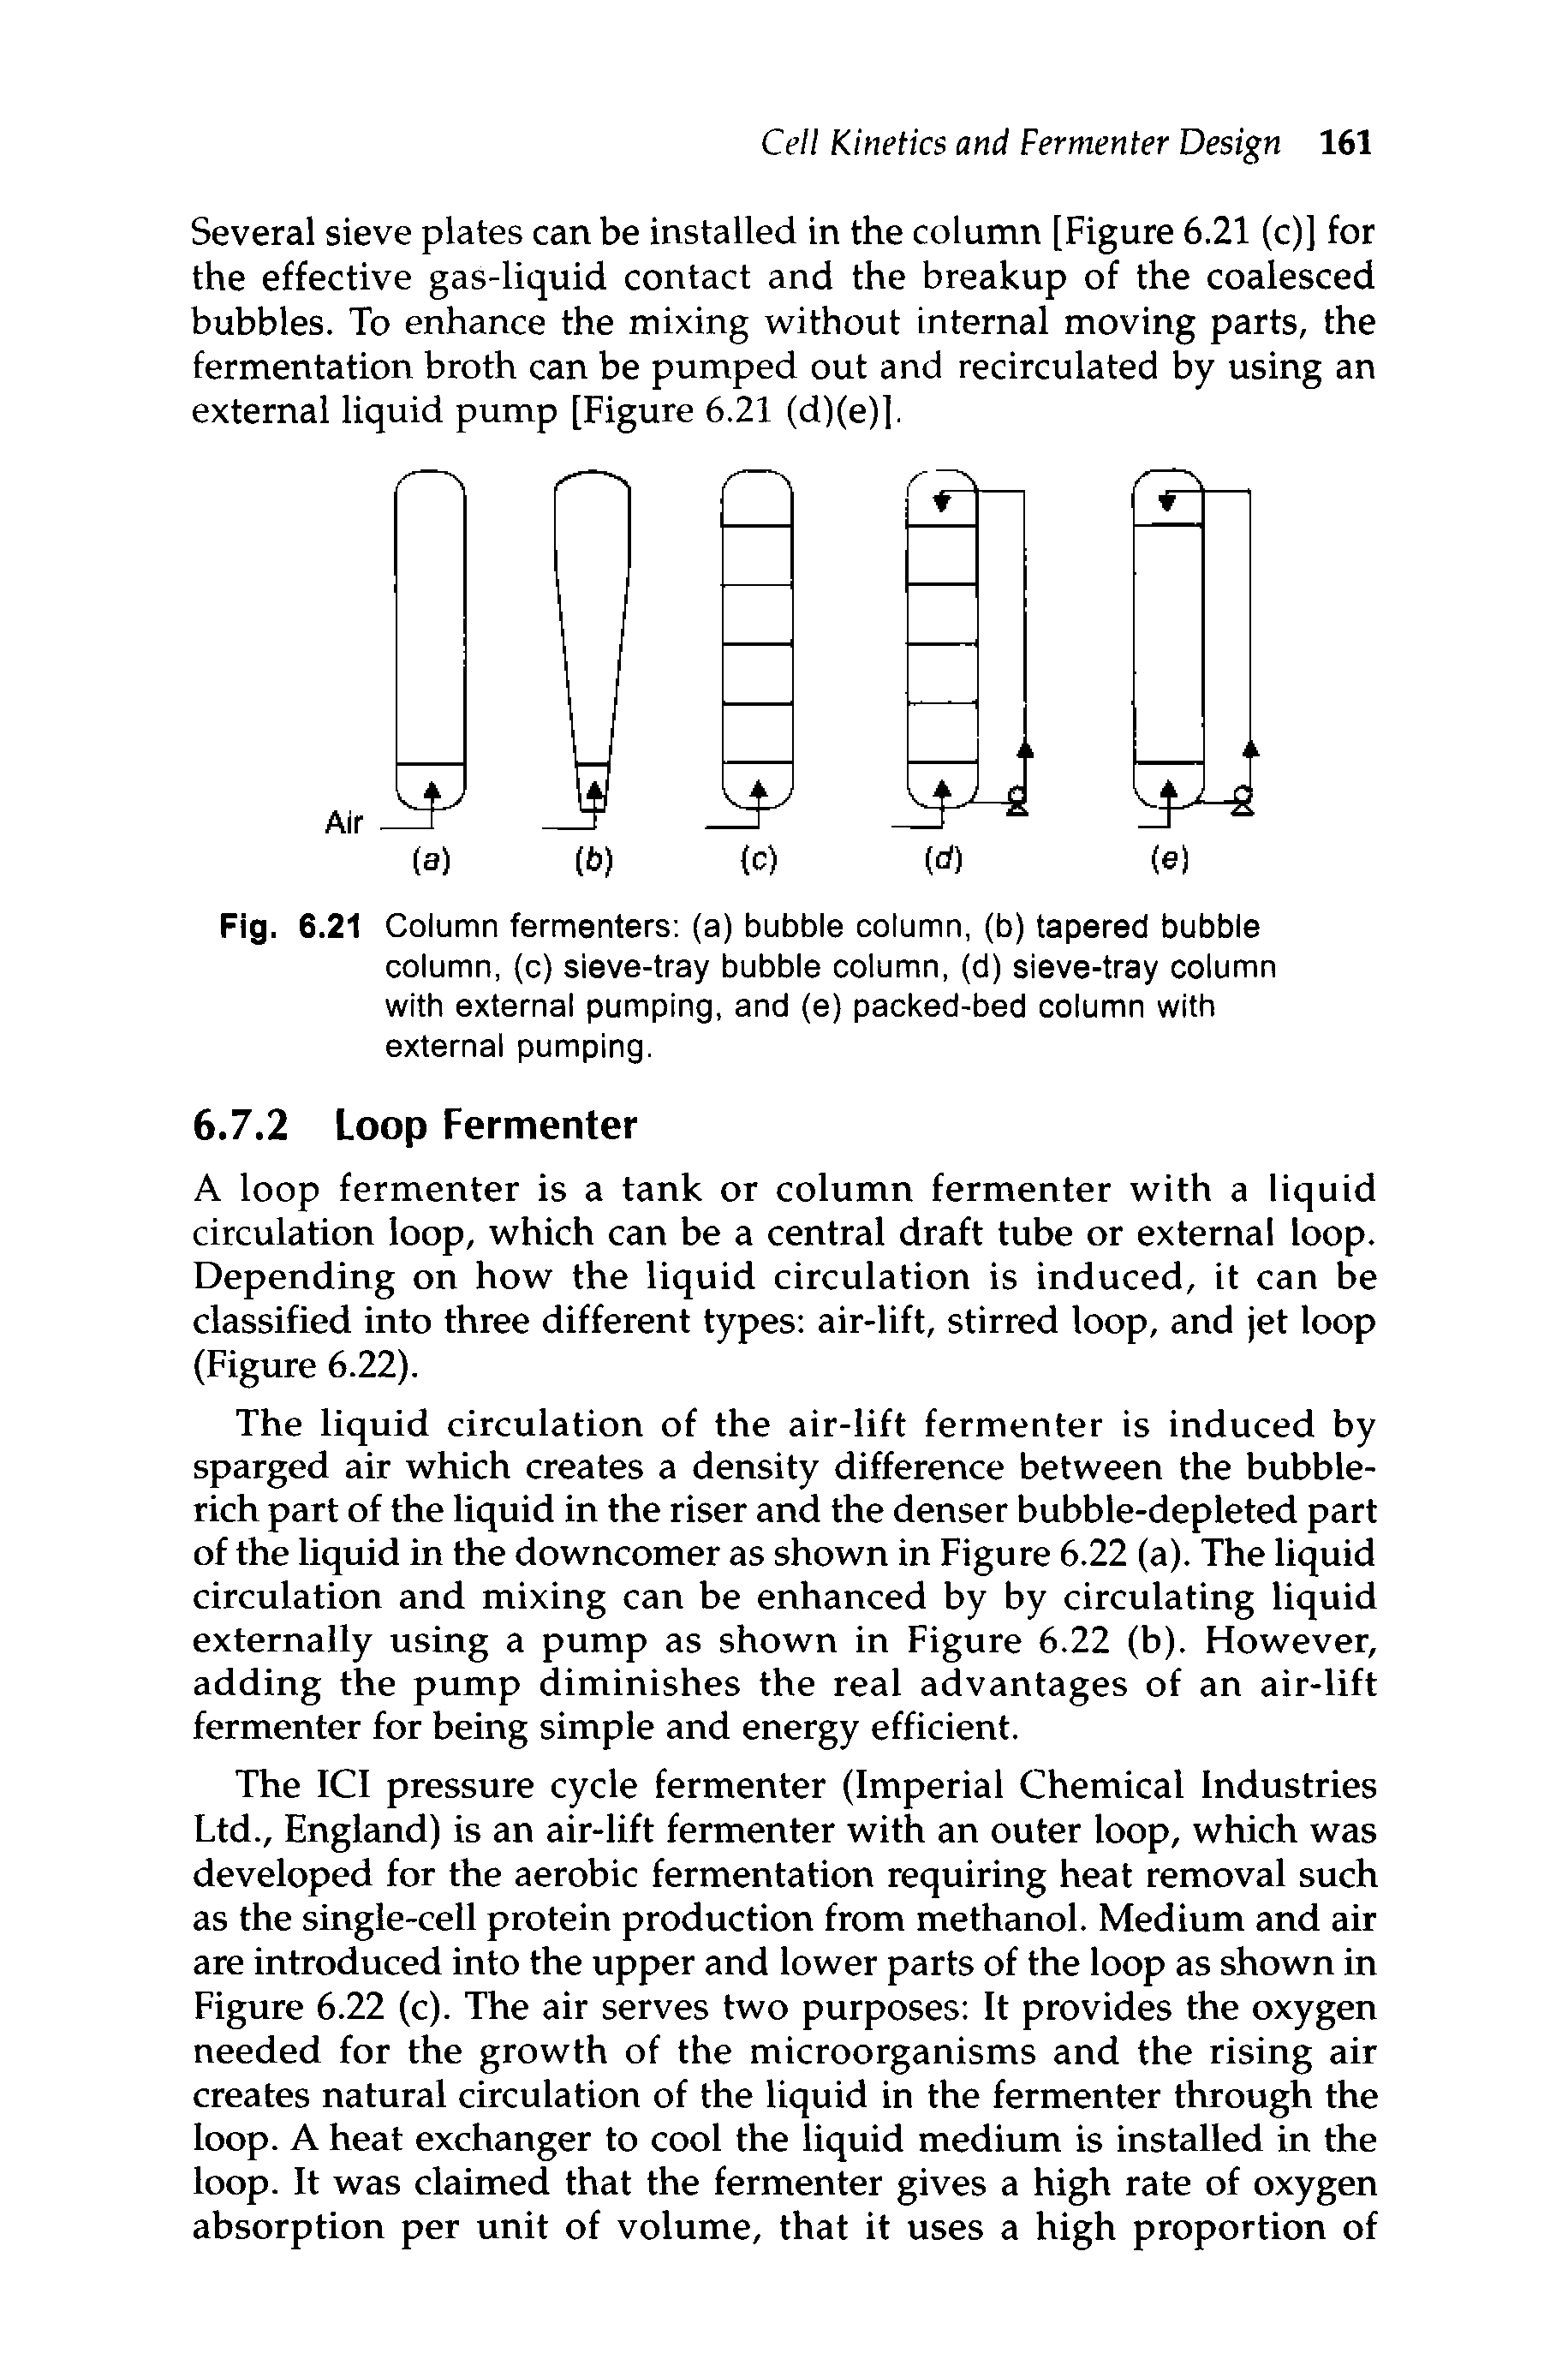 Fig. 6.21 Column fermenters (a) bubble column, (b) tapered bubble column, (c) sieve-tray bubble column, (d) sieve-tray column with external pumping, and (e) packed-bed column with external pumping.